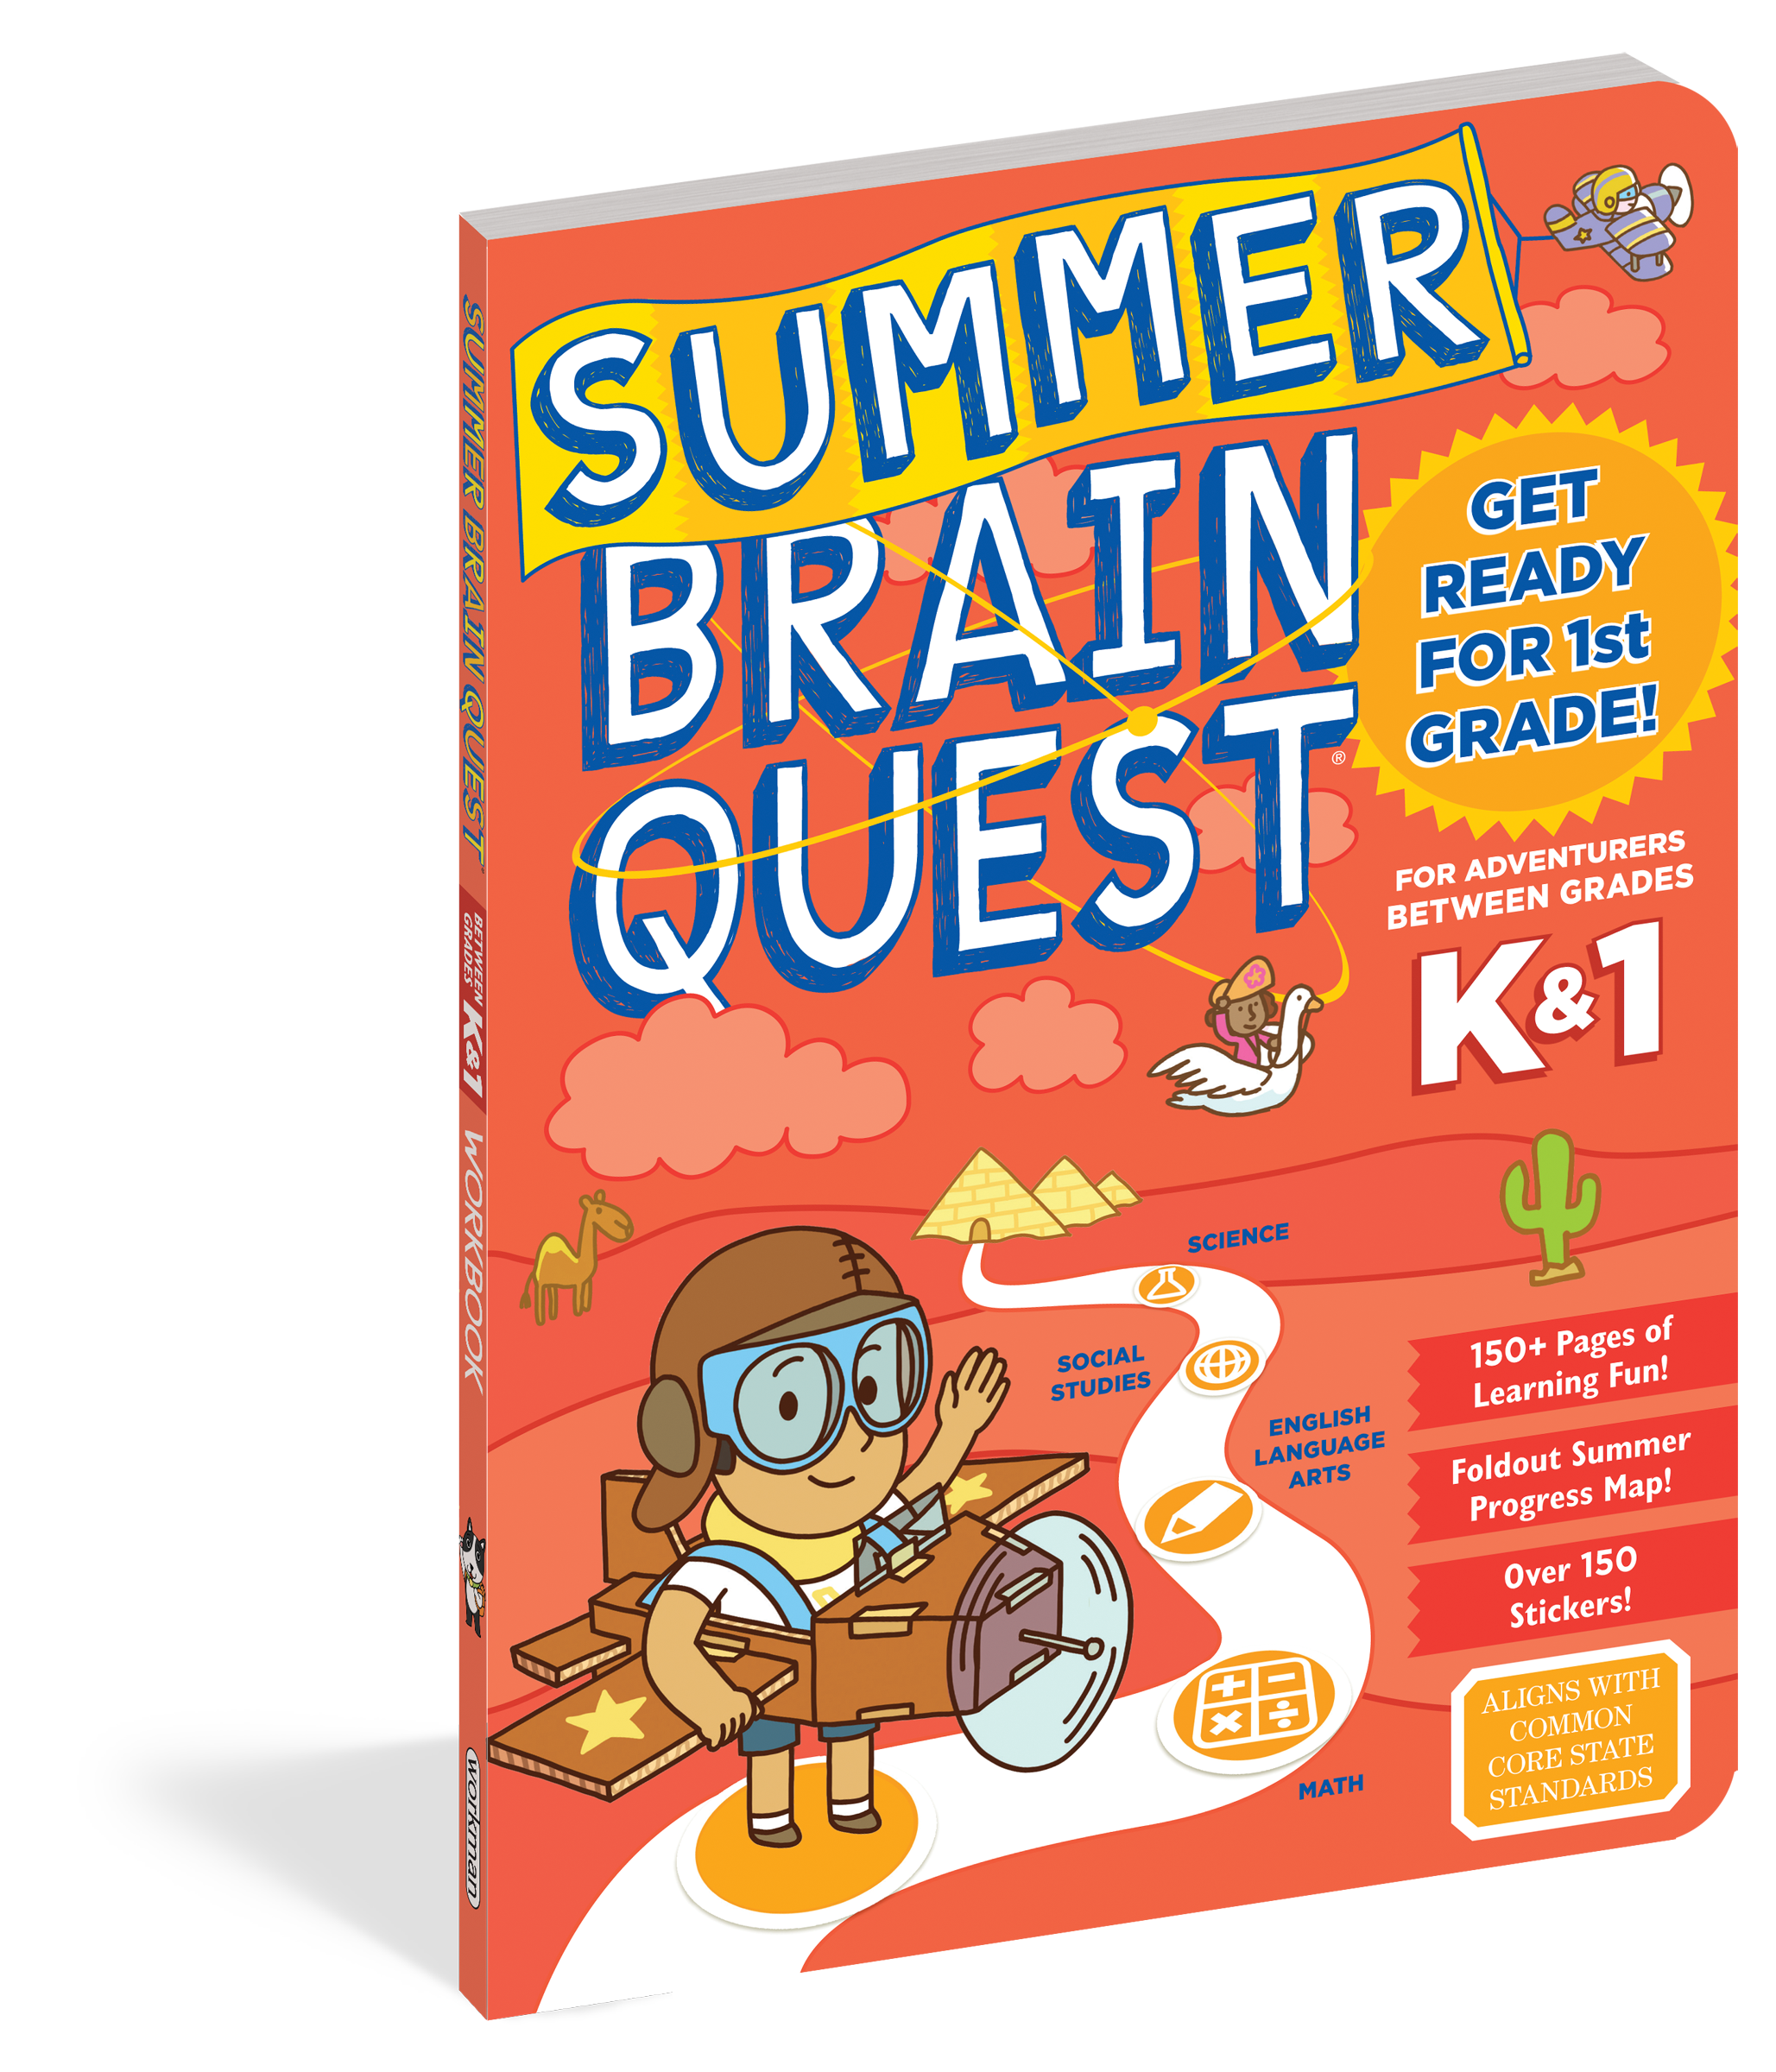 Summer Brain Quest K&1 - Get Ready For 1st Grade!    